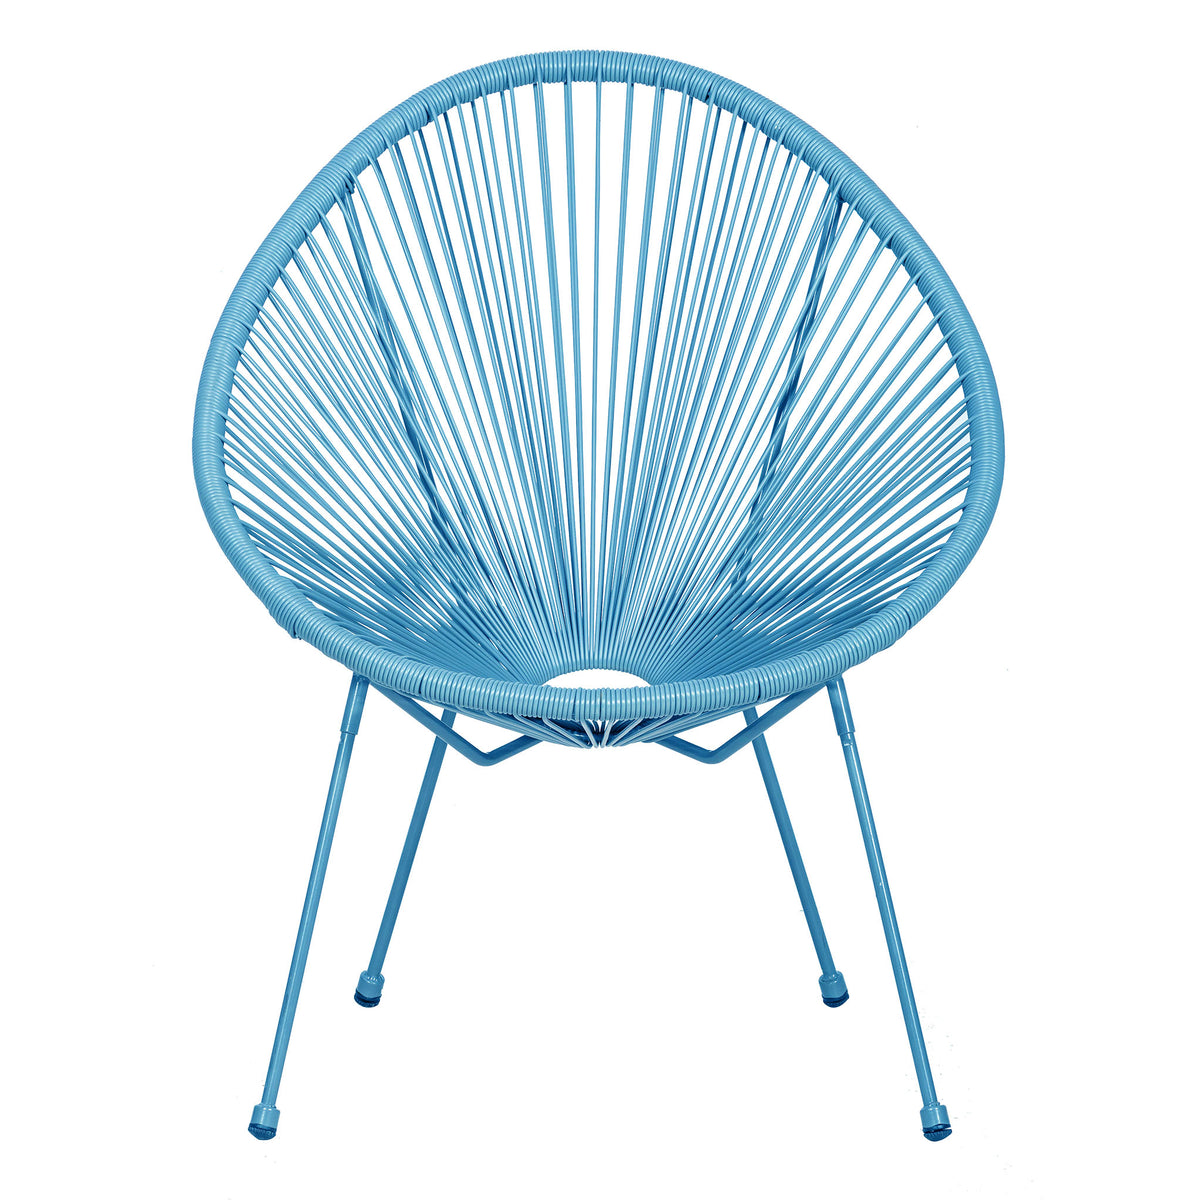 Monaco Blue 2 Seat Garden Egg Chair Bistro Set